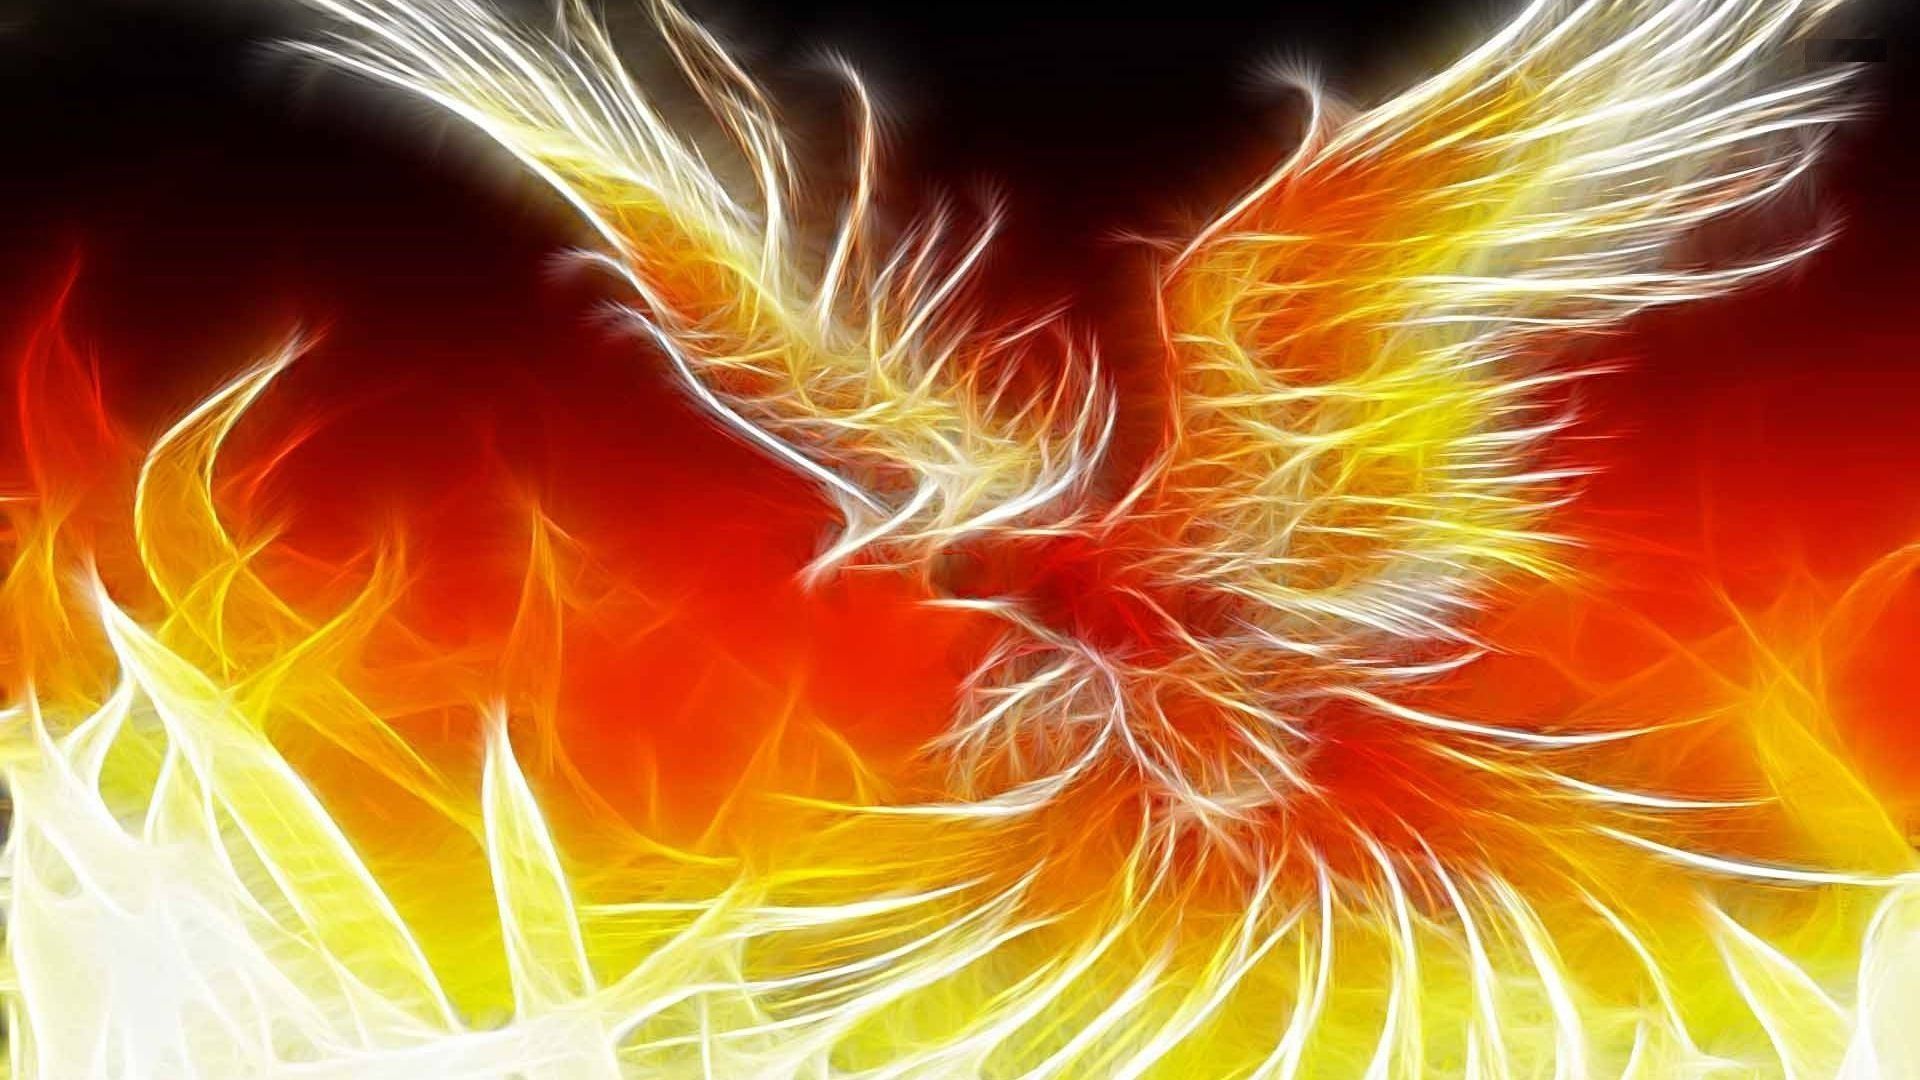 Image result for phoenix. Phoenix wallpaper, Picture of phoenix, Abstract